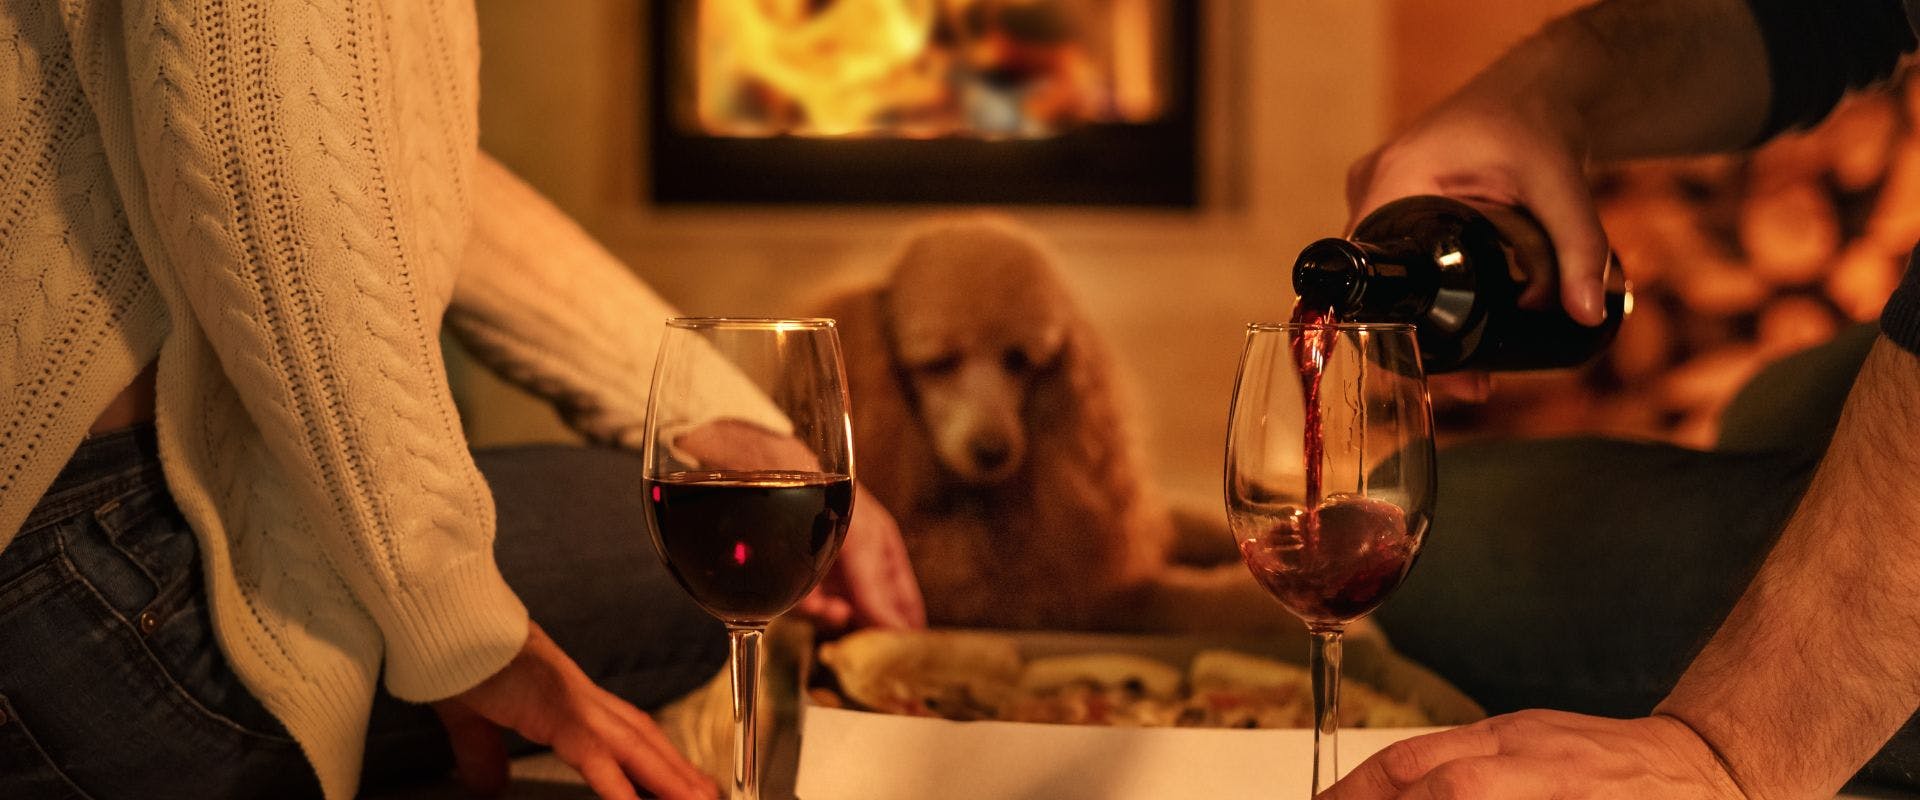 Poodle with pet parents pouring wine